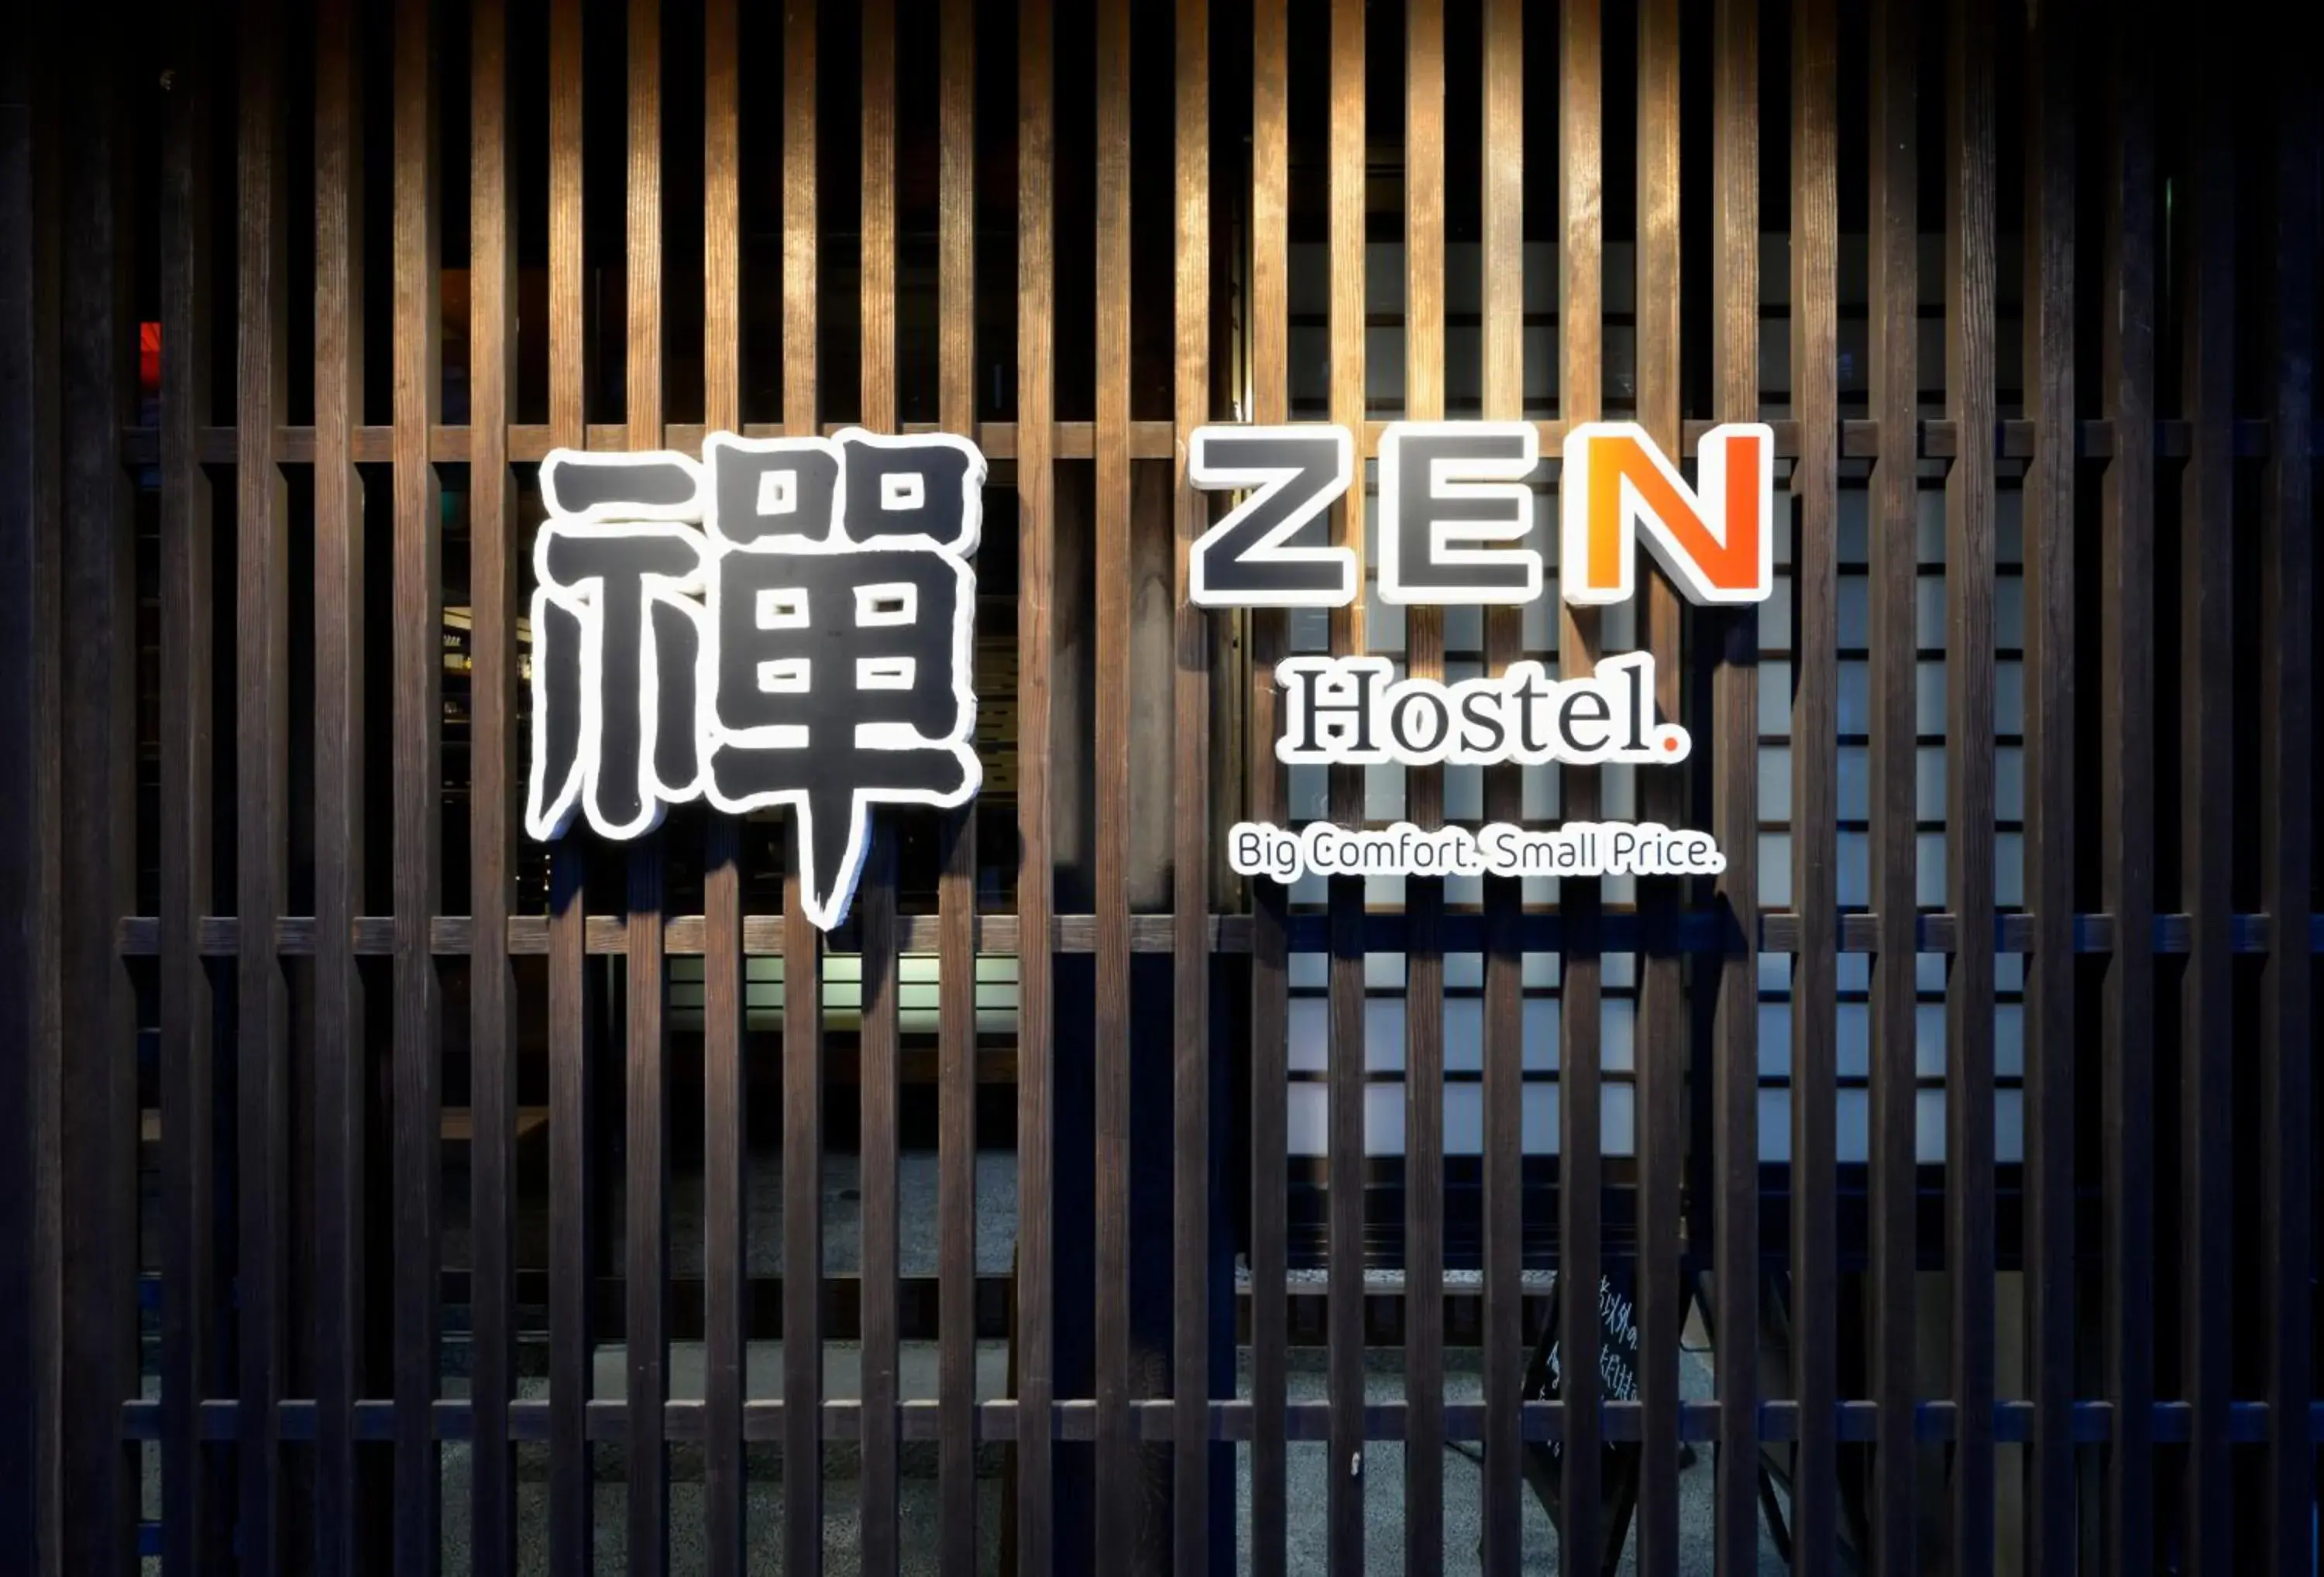 Property logo or sign in Zen Hostel